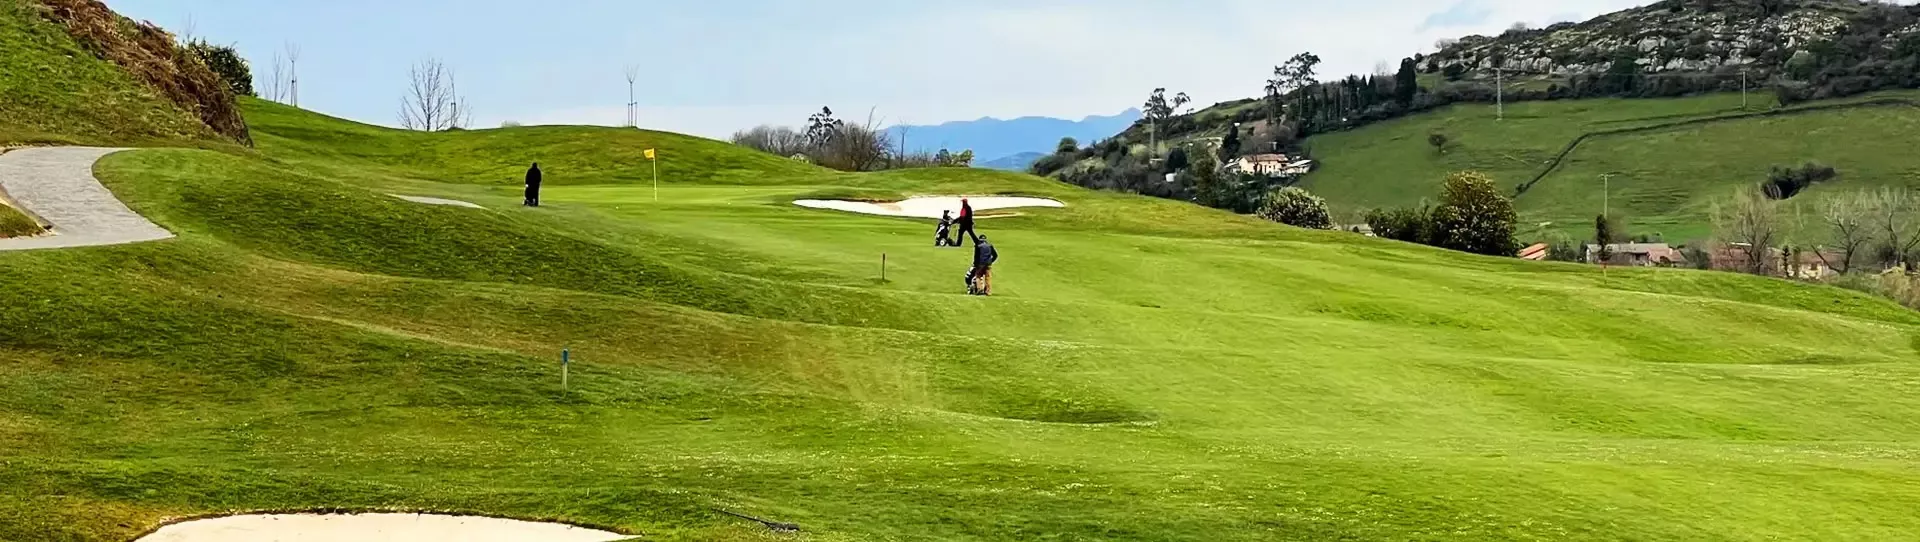 Spain golf courses - Meaztegi Golf Course - Photo 3